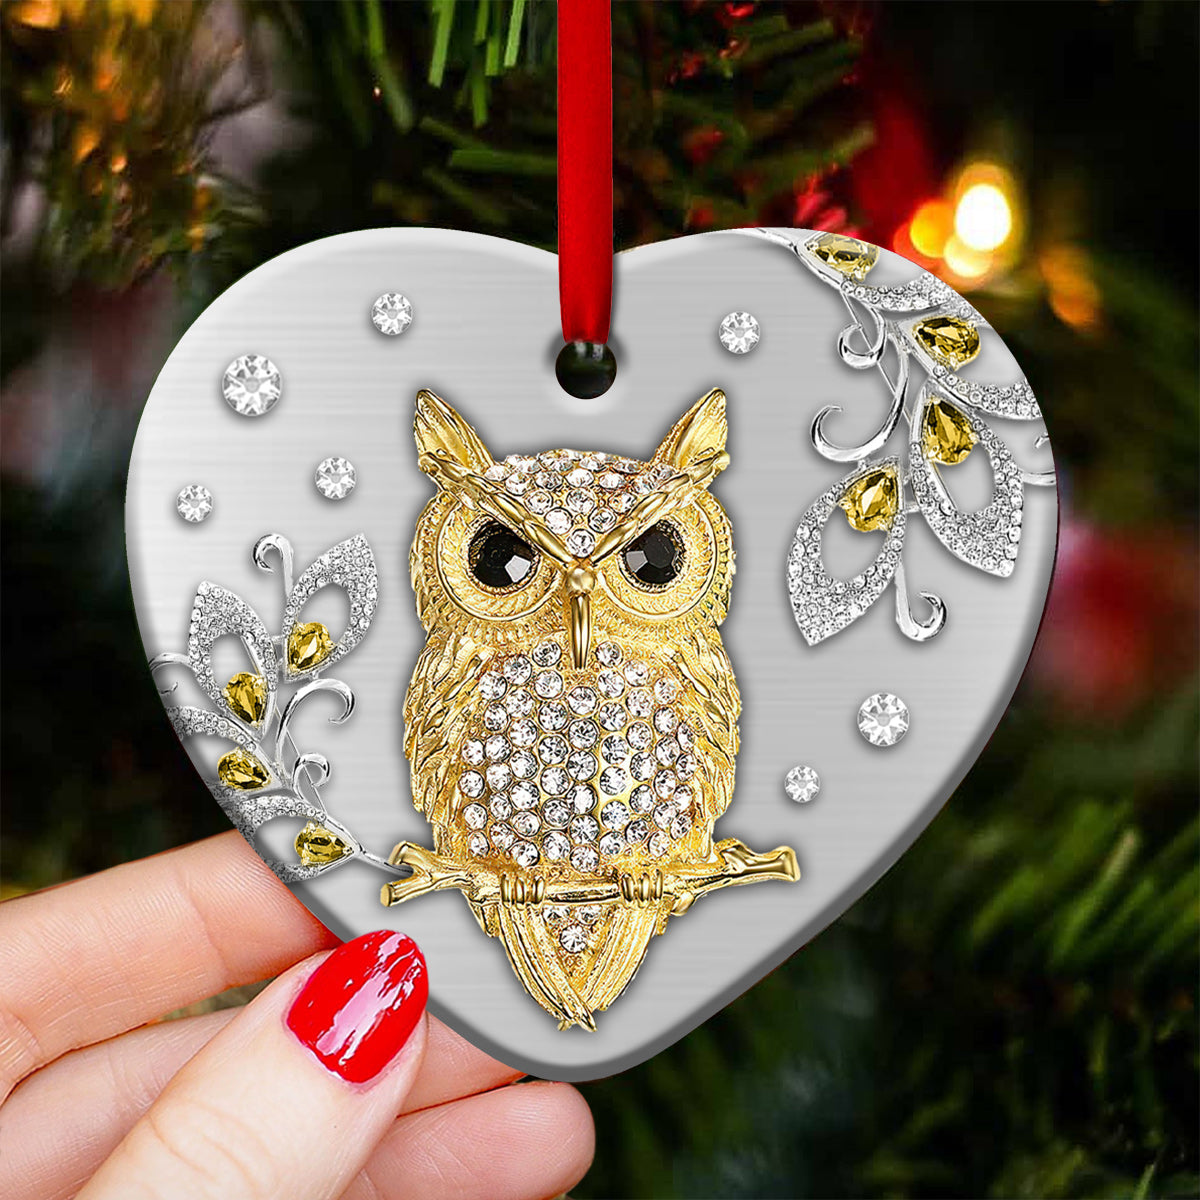 Owl Advice Be Observant - Heart Ornament - Owls Matrix LTD